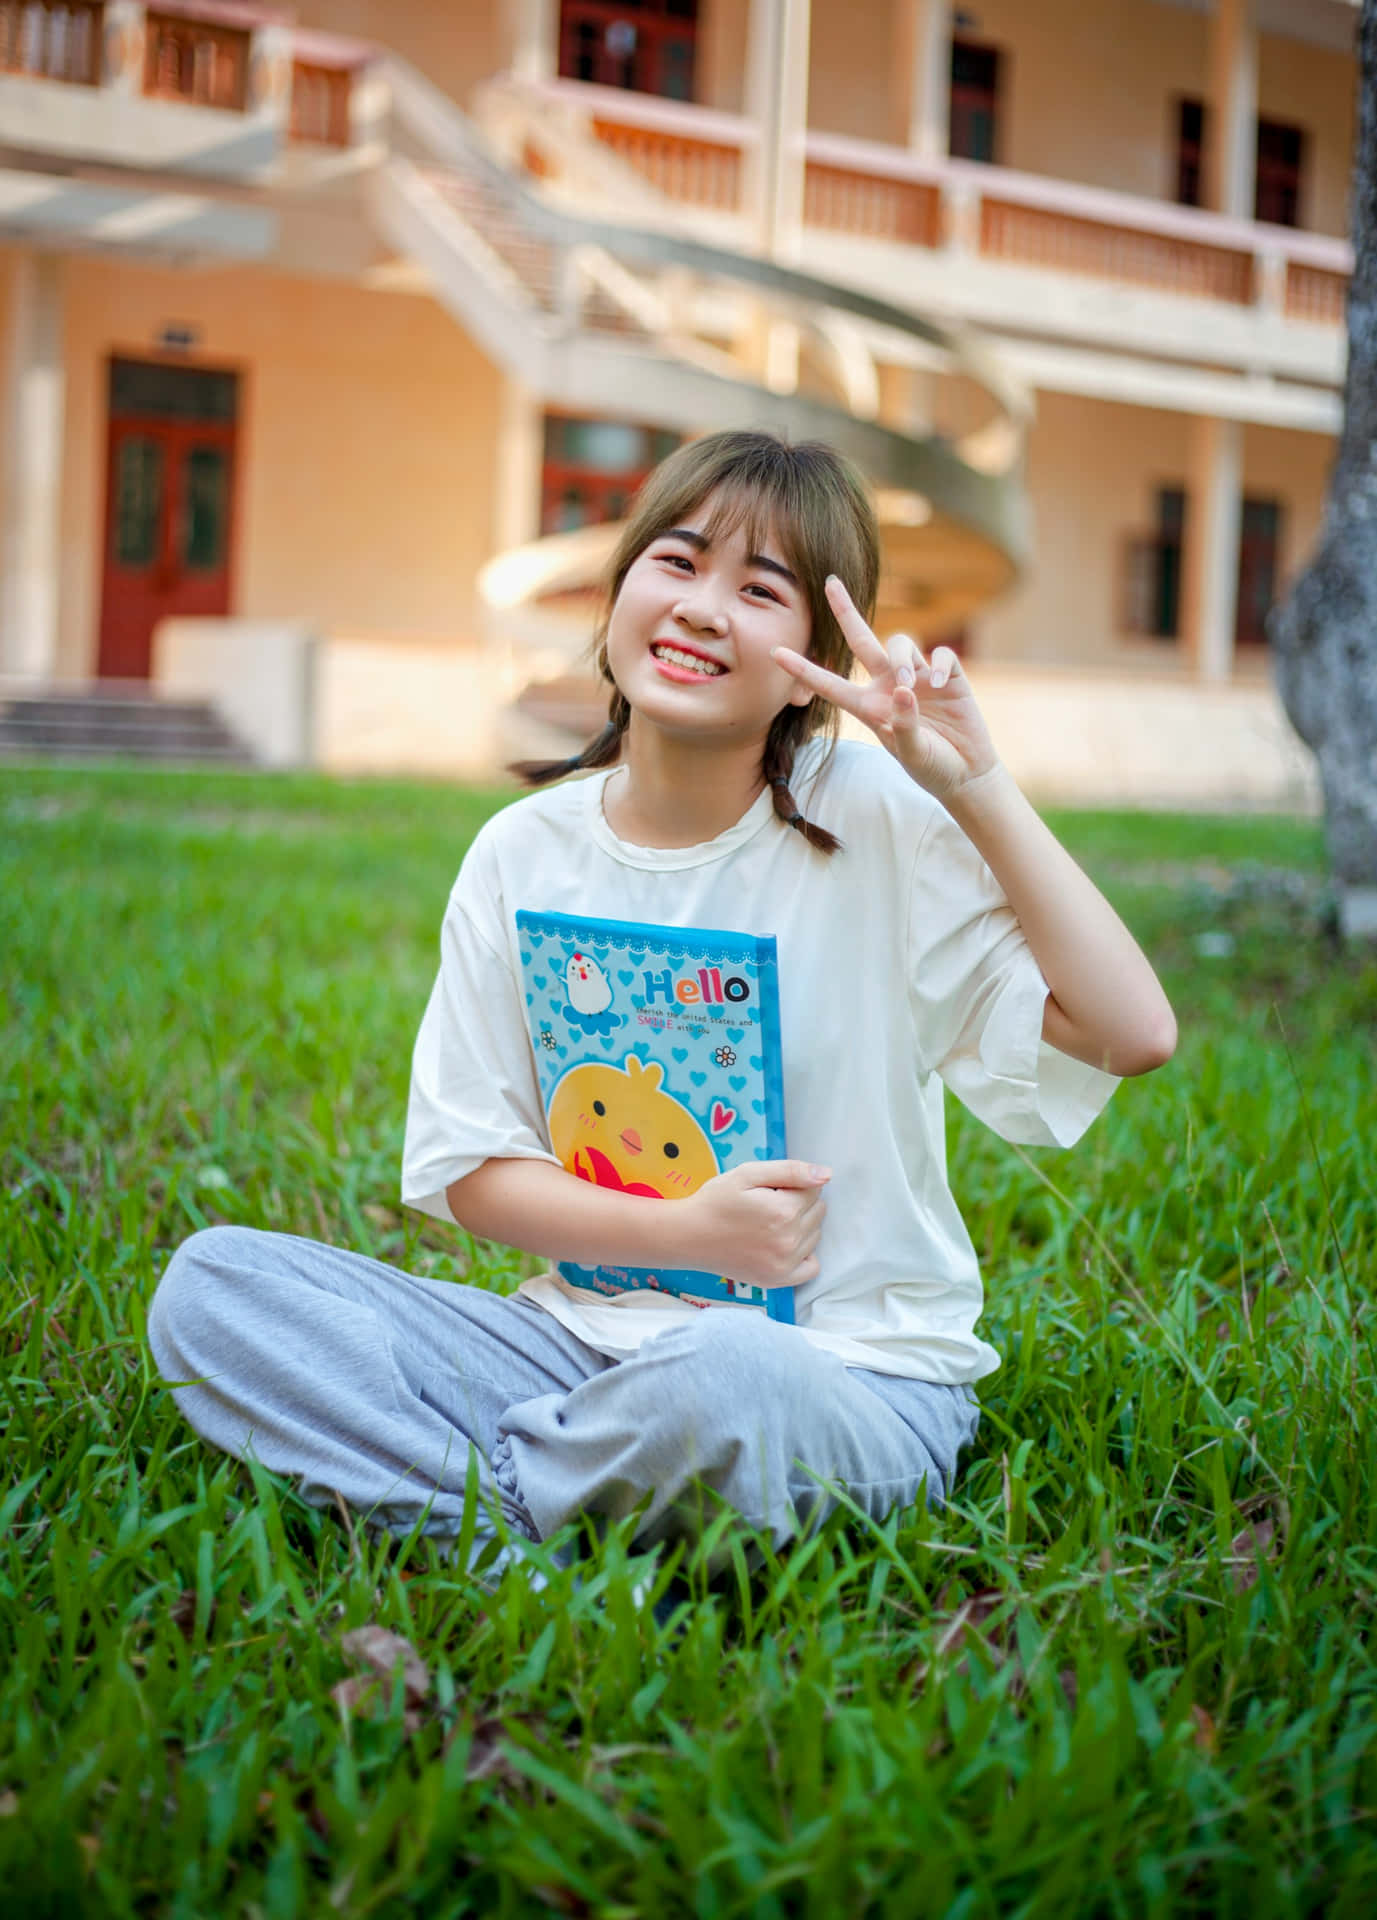 Smiling Girl Peace Sign Cute Aesthetic.jpg Wallpaper